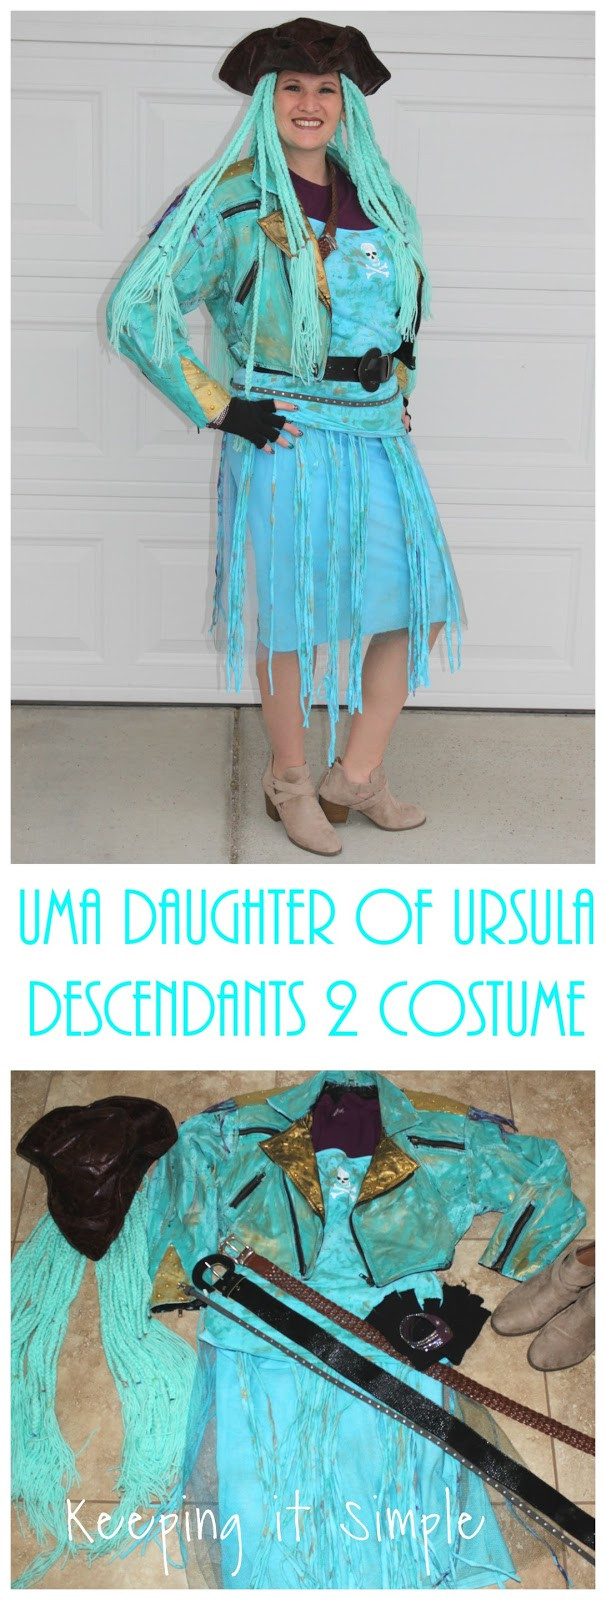 DIY Uma Costume
 Keeping it Simple DIY Uma from Descendants 2 Costume